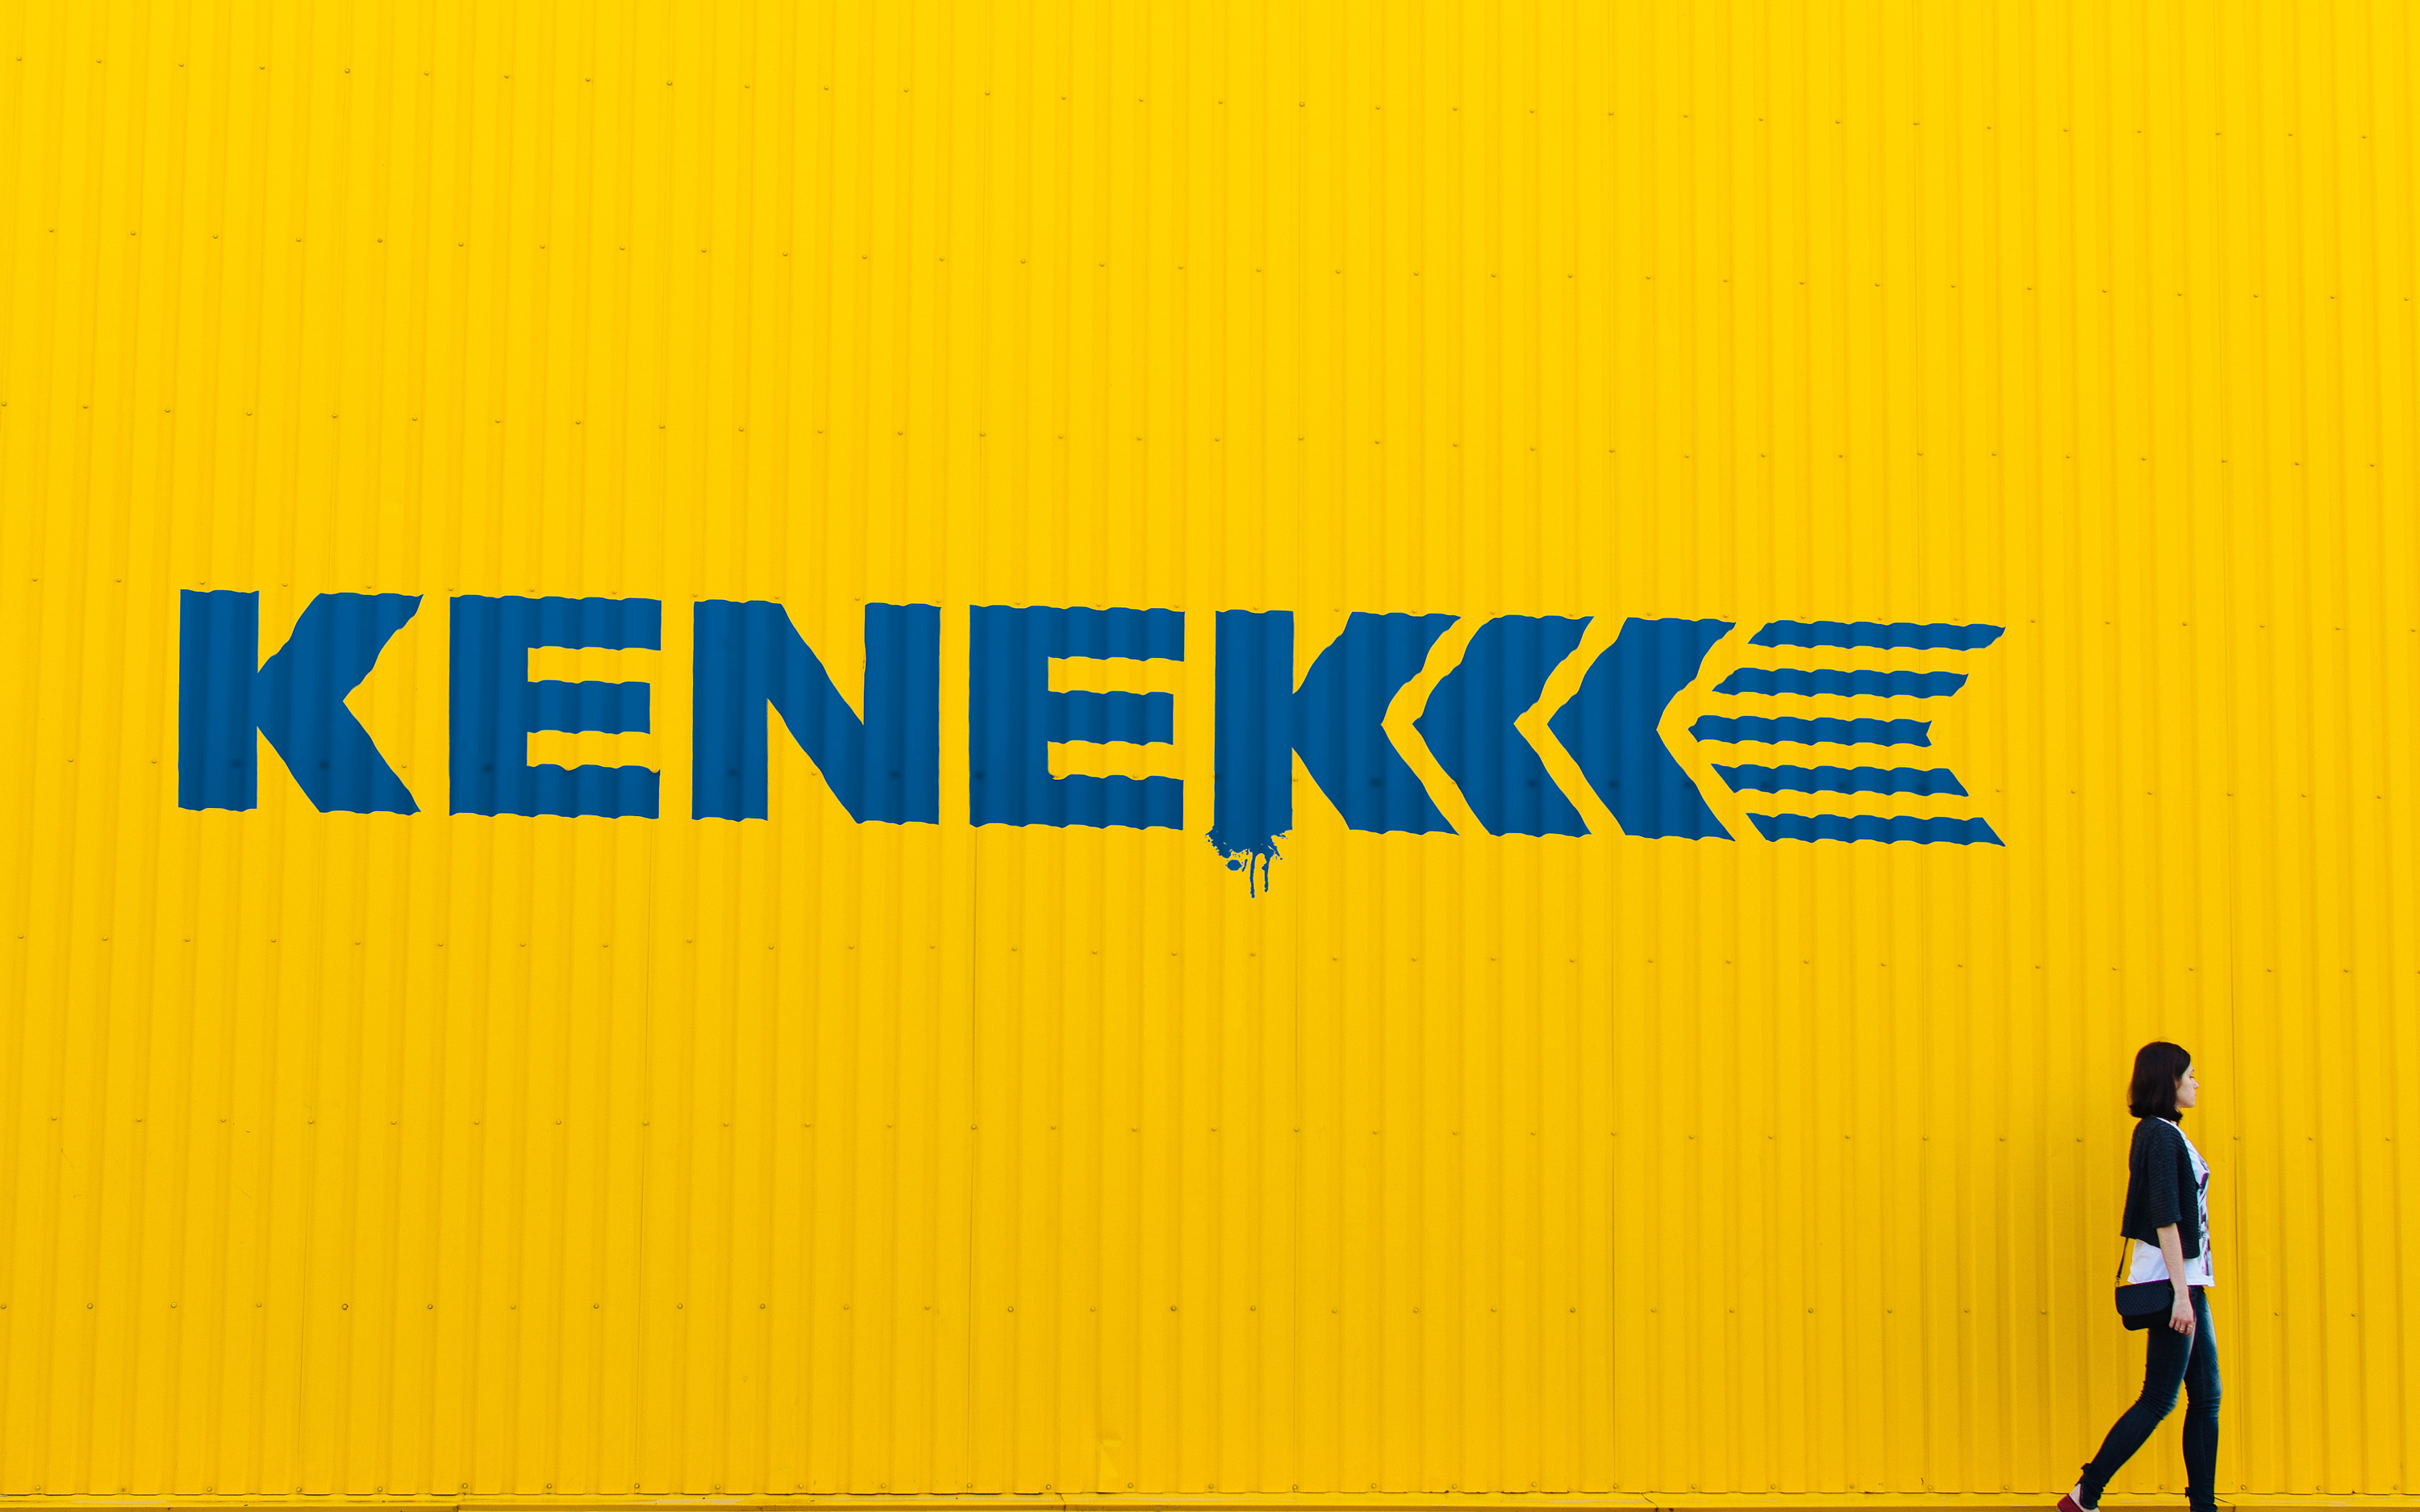 Kenek. Logo for a bakery